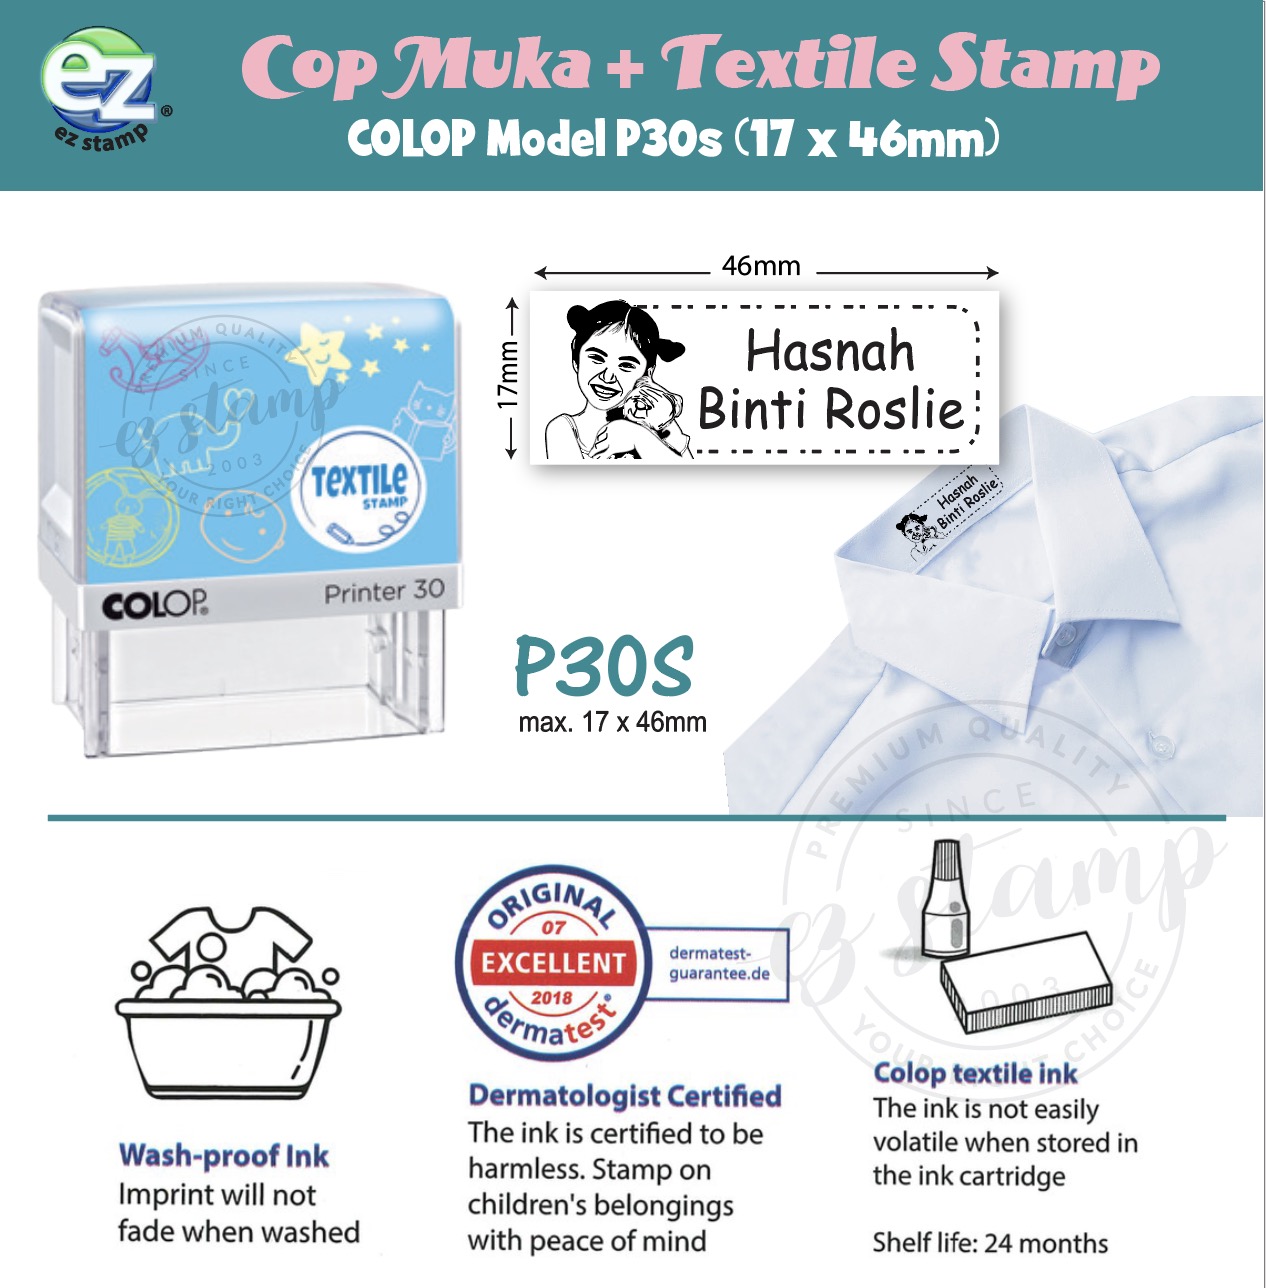 COP Muka + Textile Stamp P30s